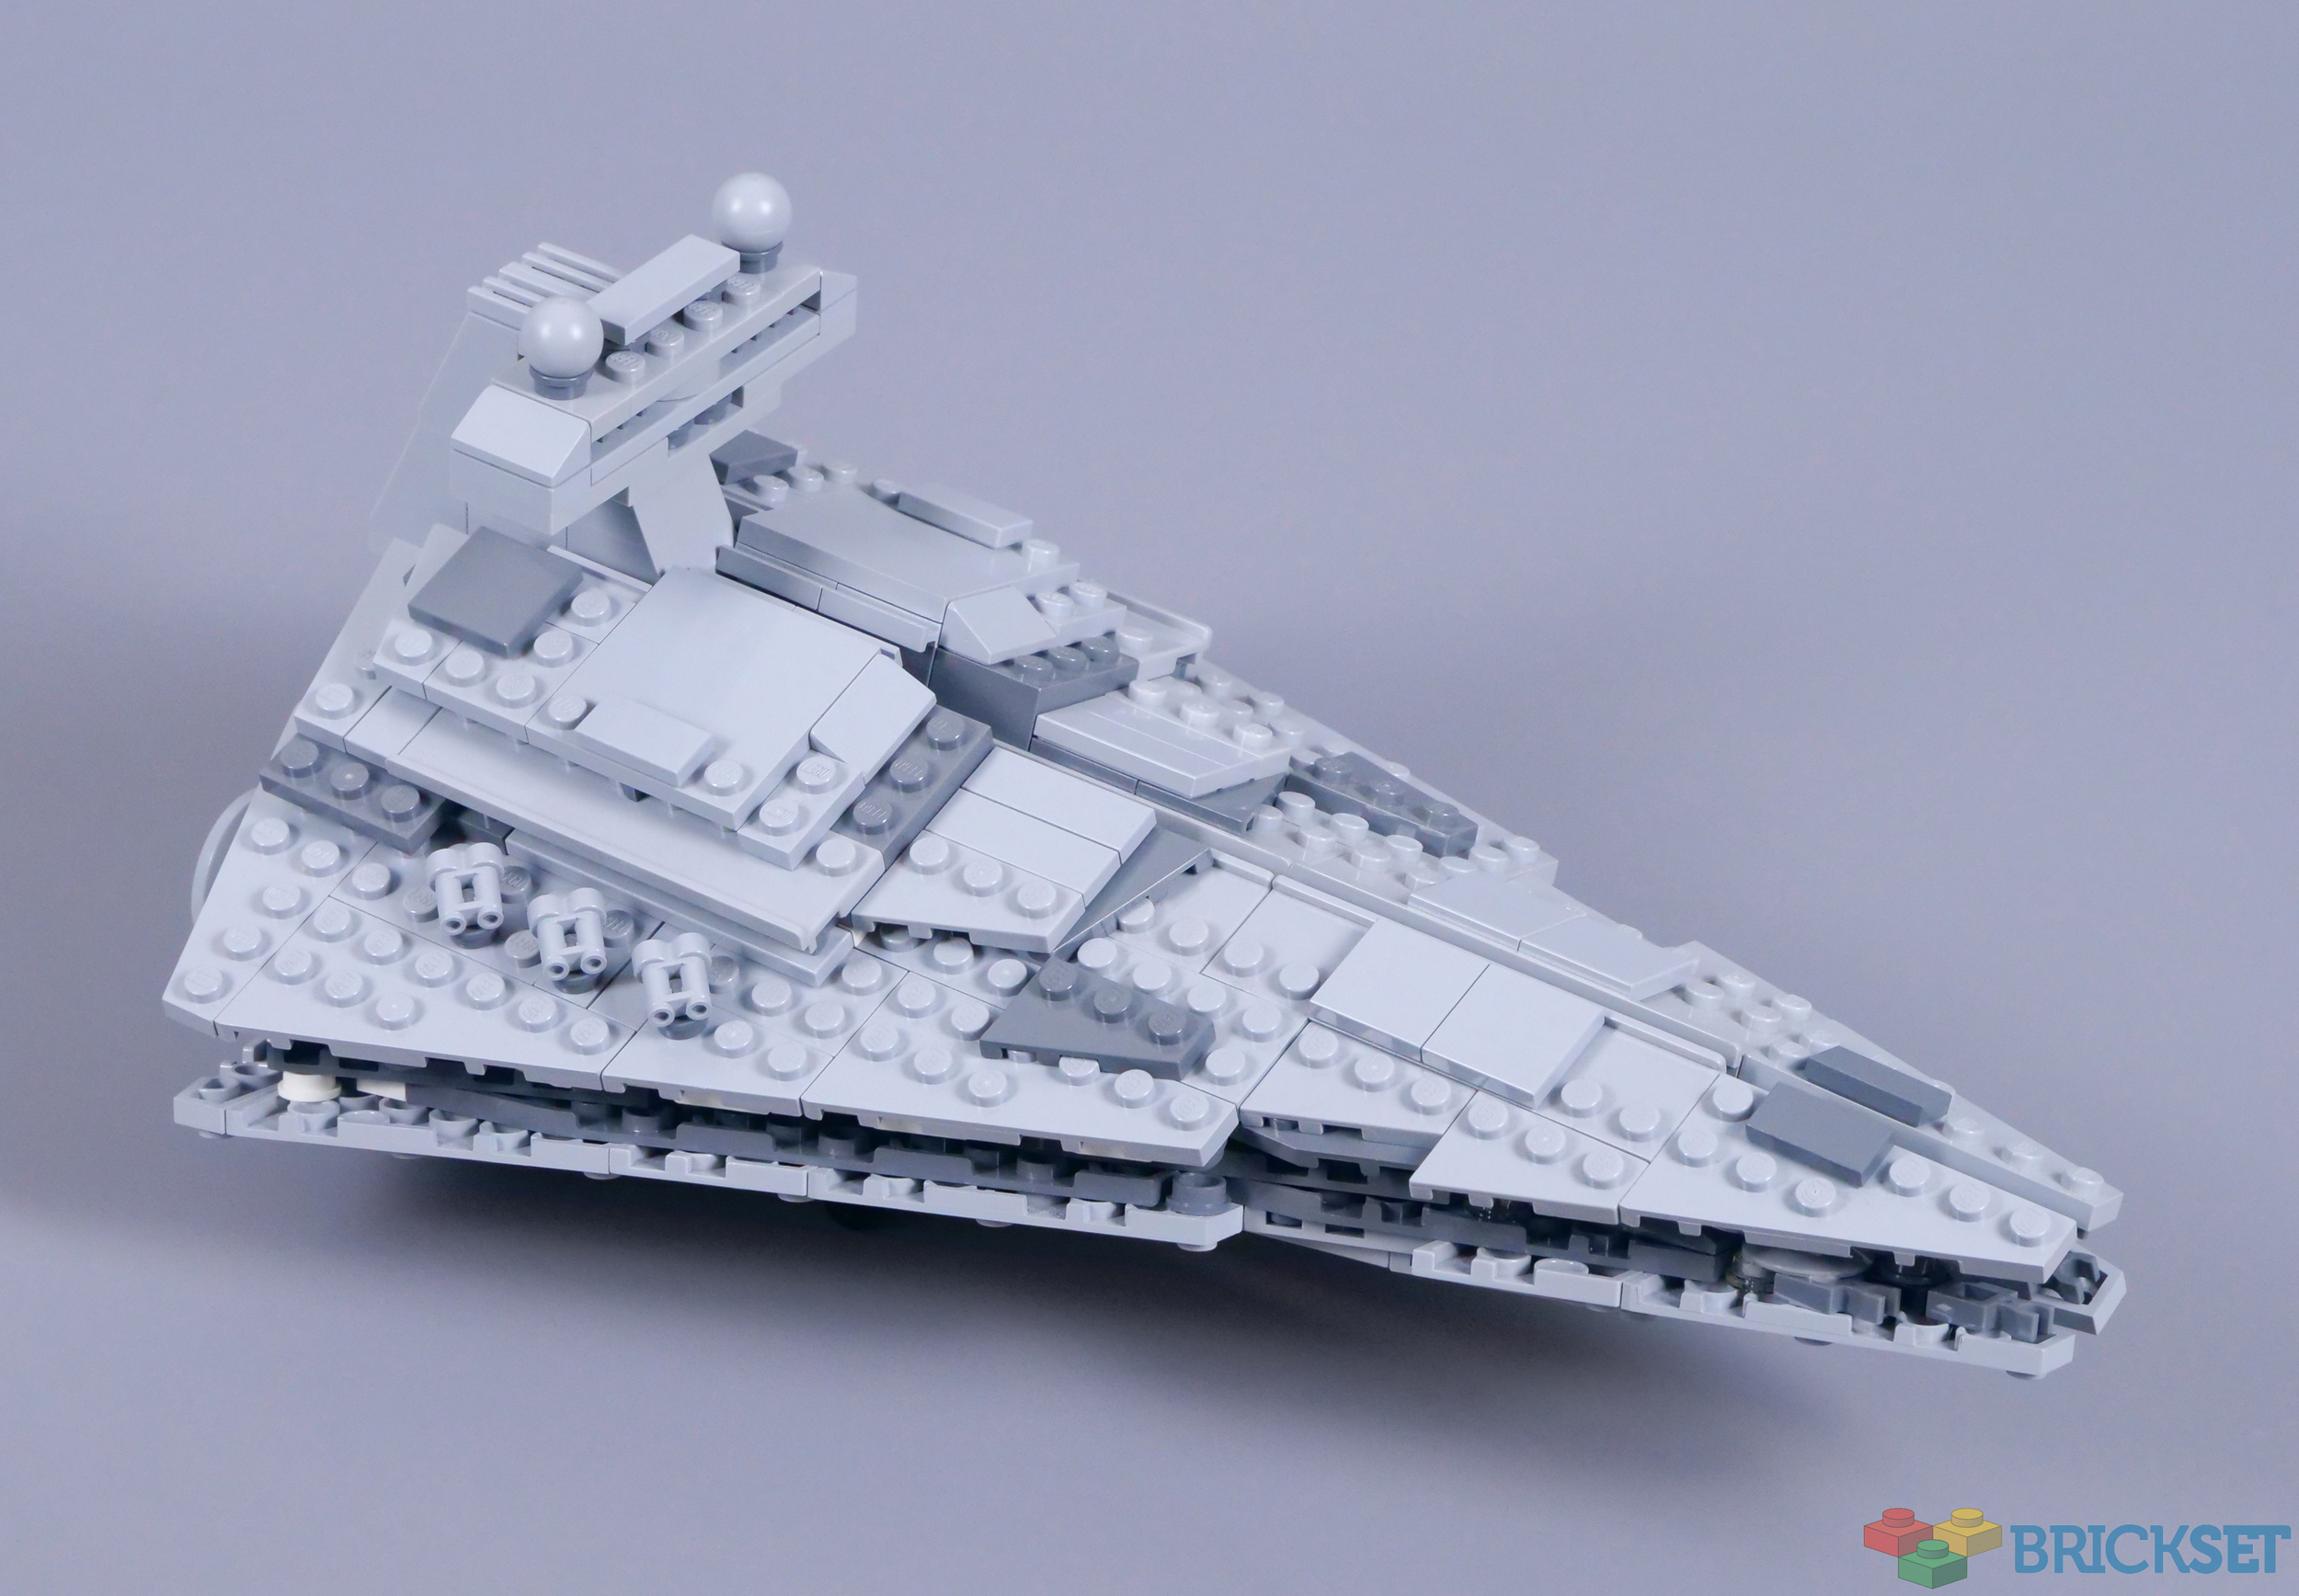 LEGO Retro 8099 Midi-scale Imperial Star Destroyer [2010] review